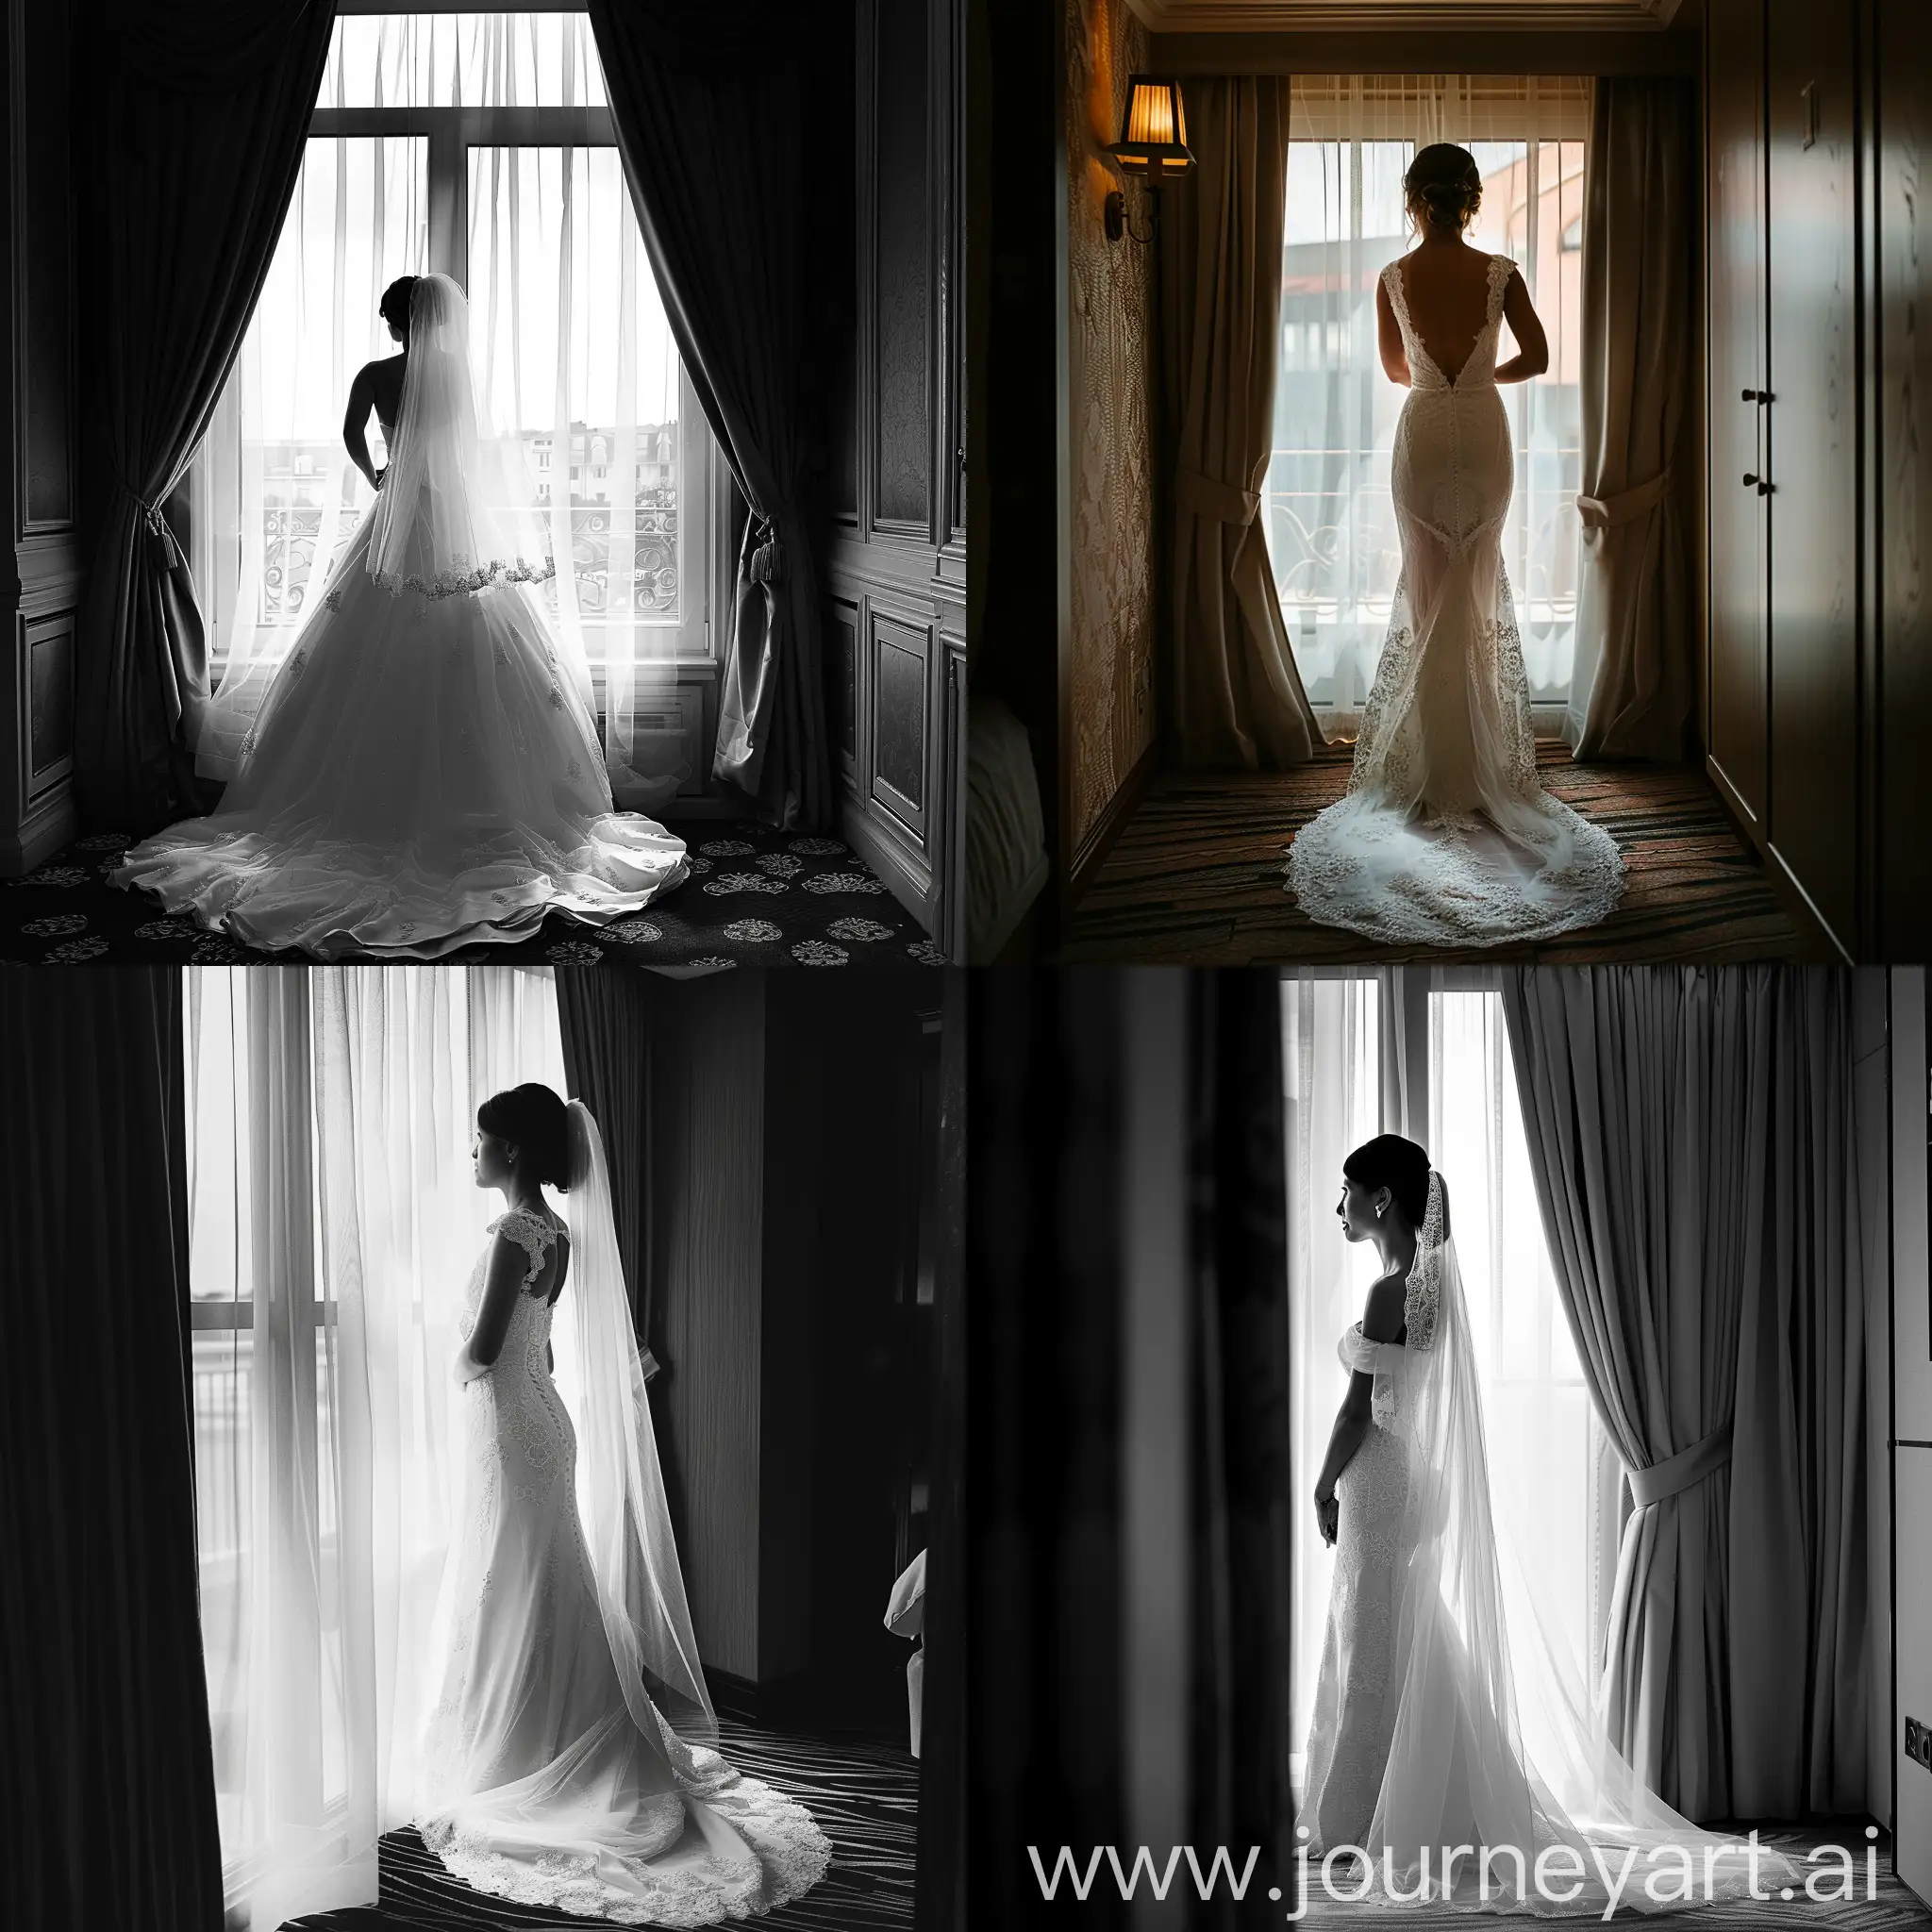 Elegant-Bride-Gazing-Out-from-Urban-Hotel-Window